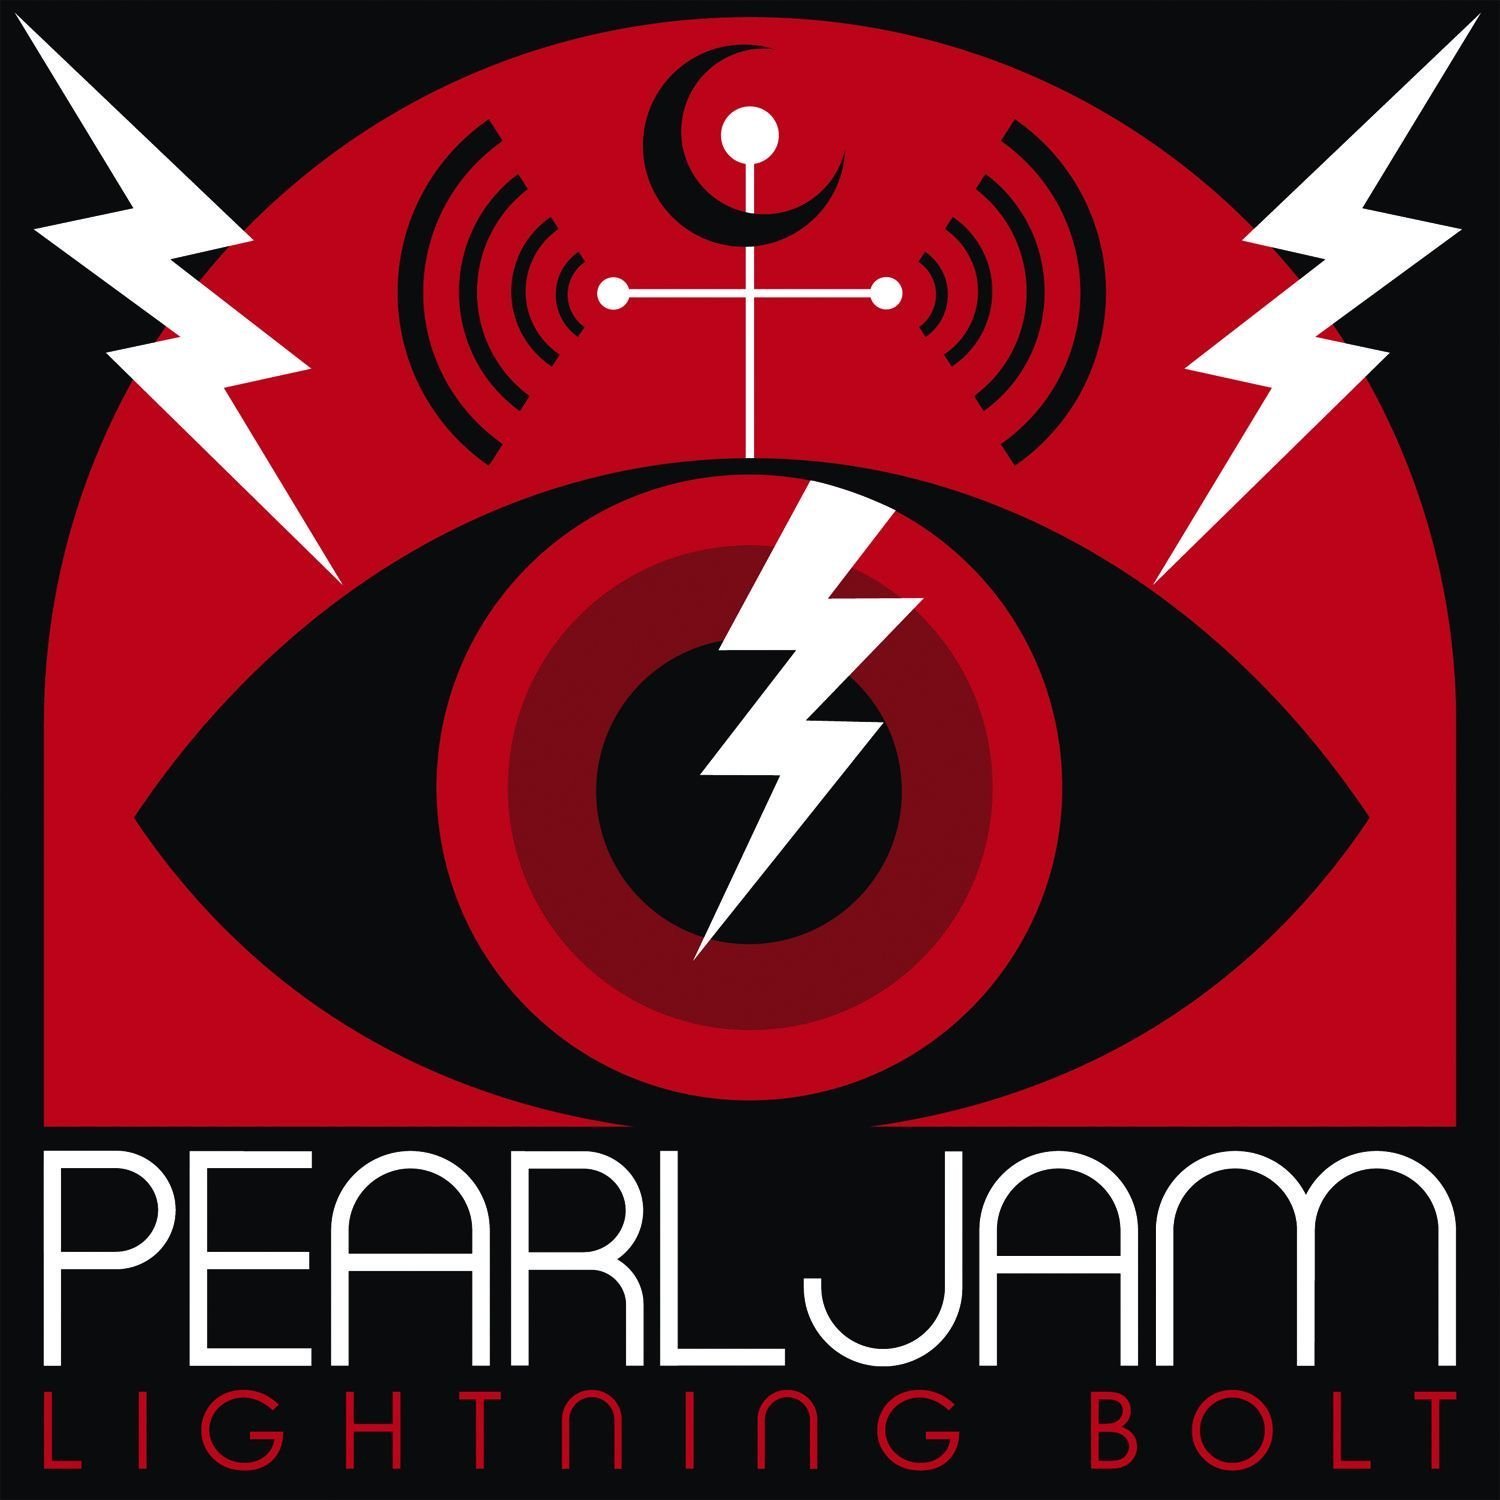 Pearl Jam Lightning Bolt [album Review] The Fire Note